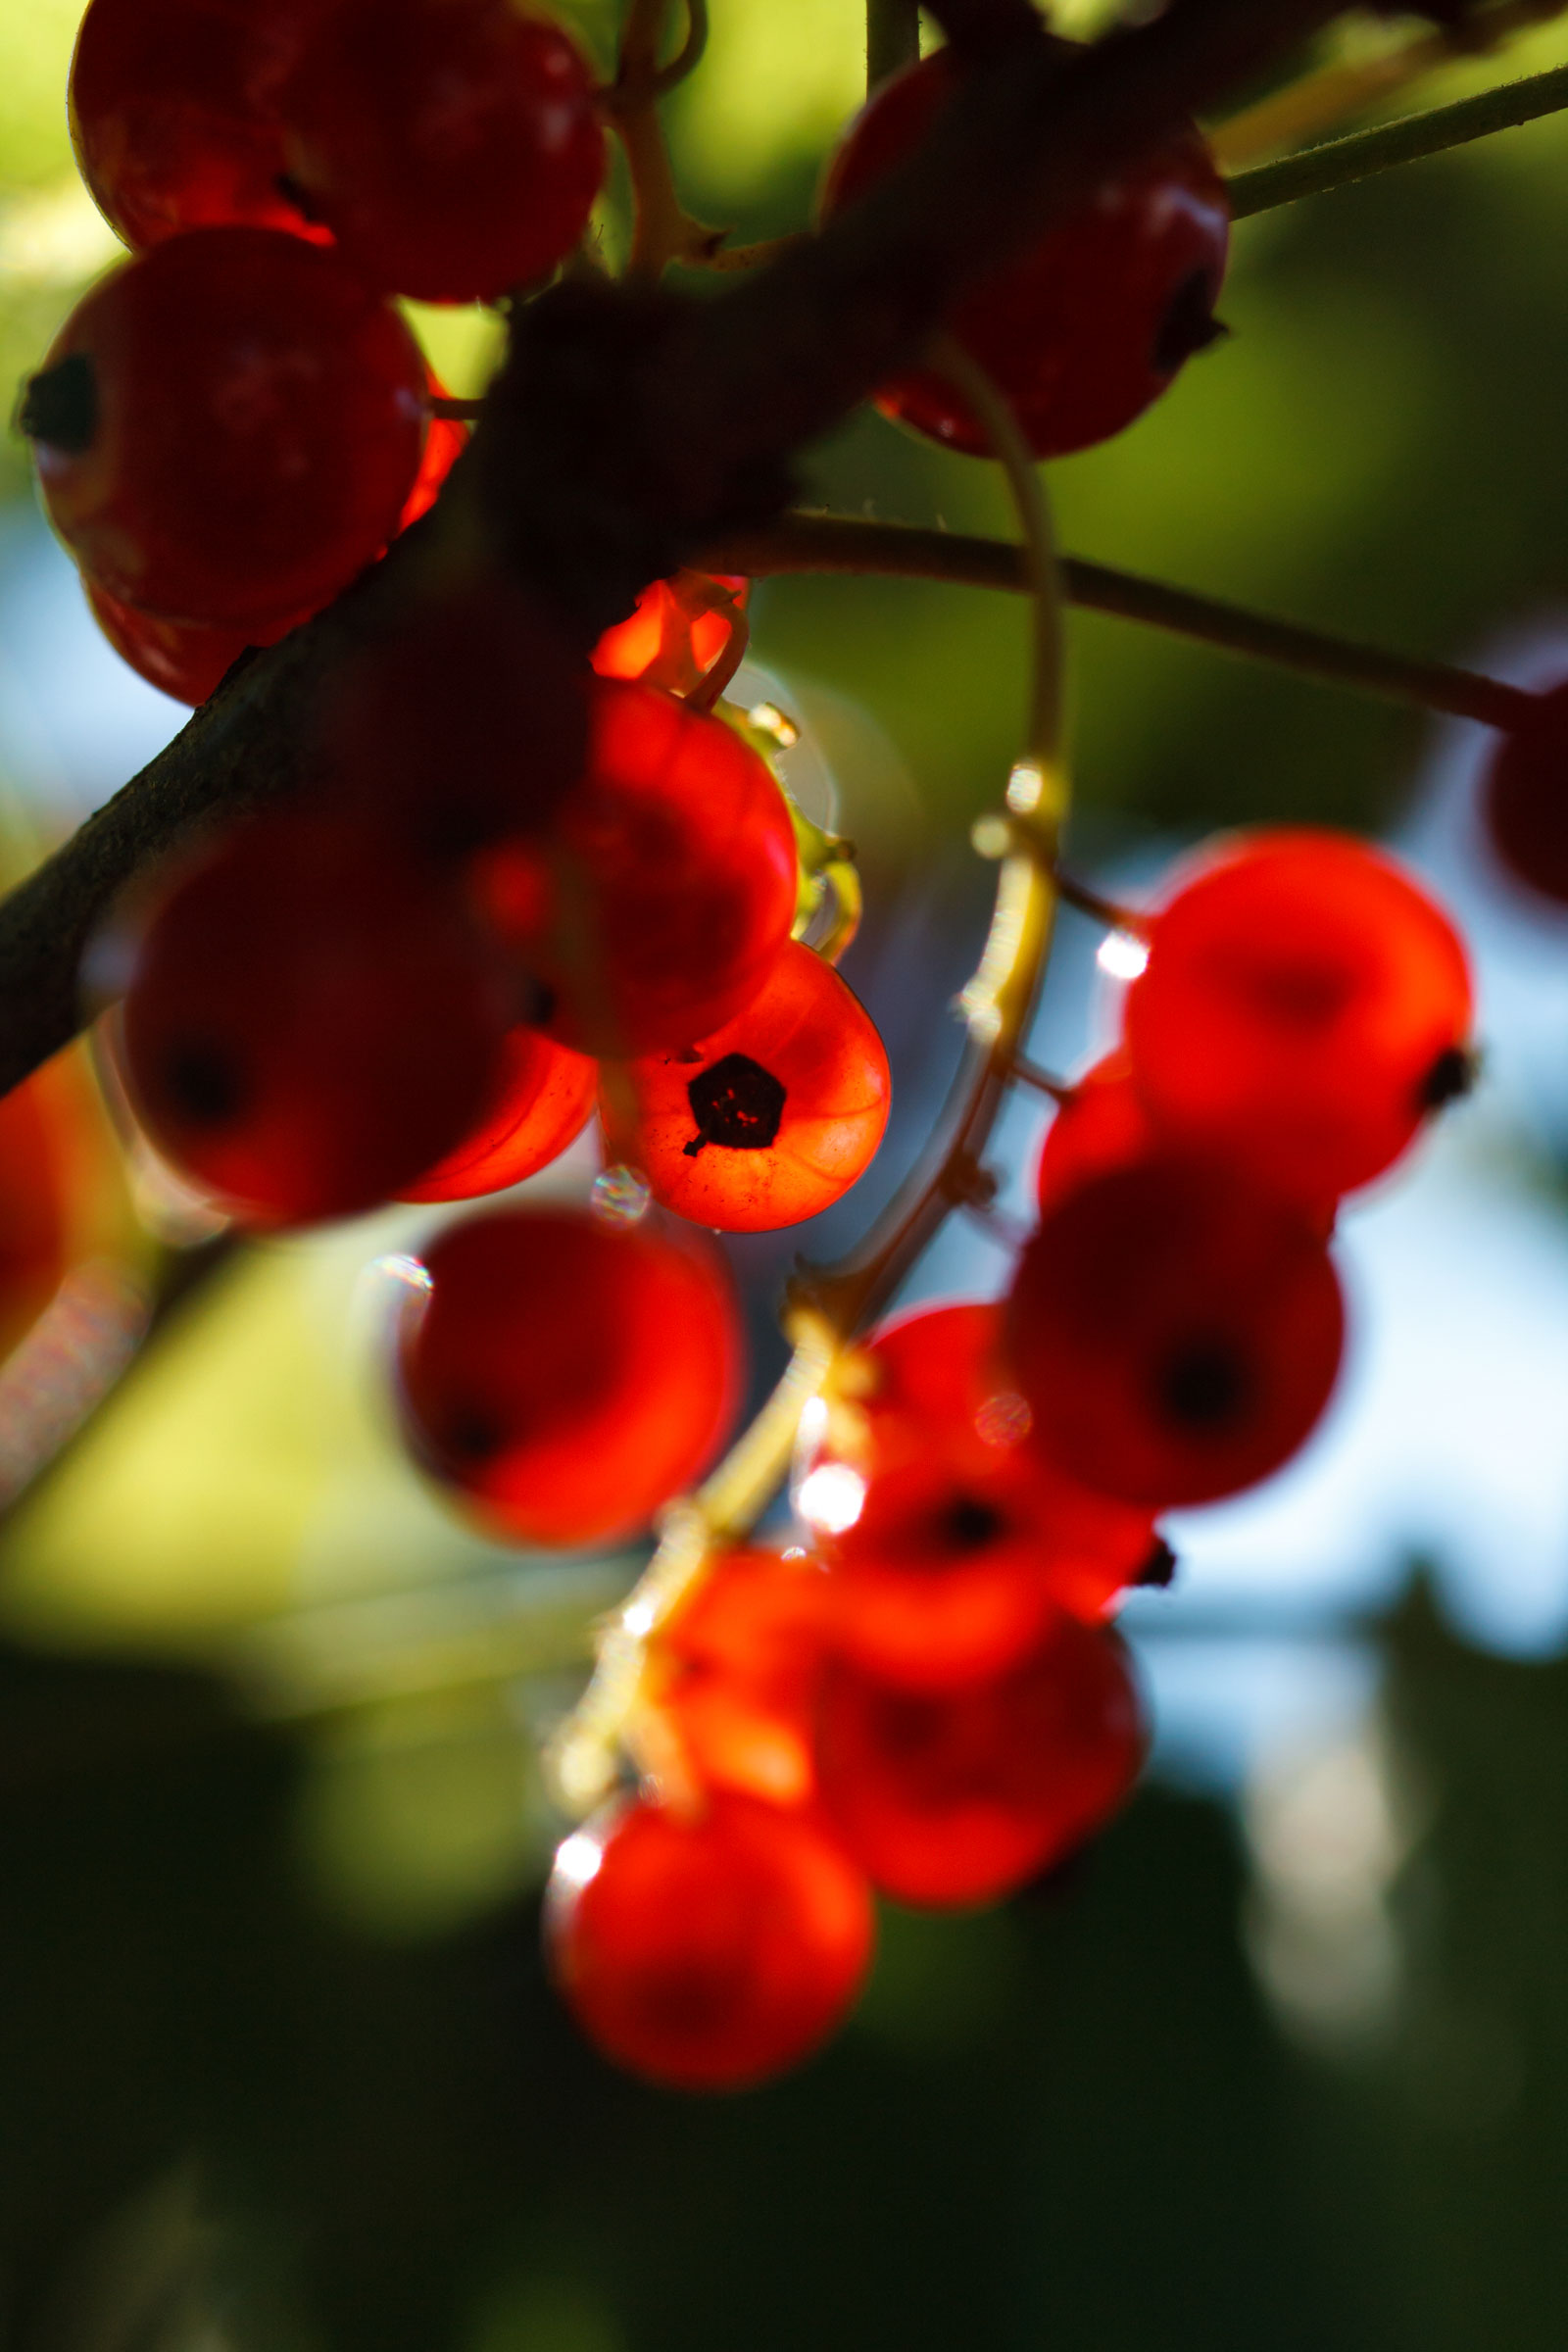 Red berries on a viburnum bush